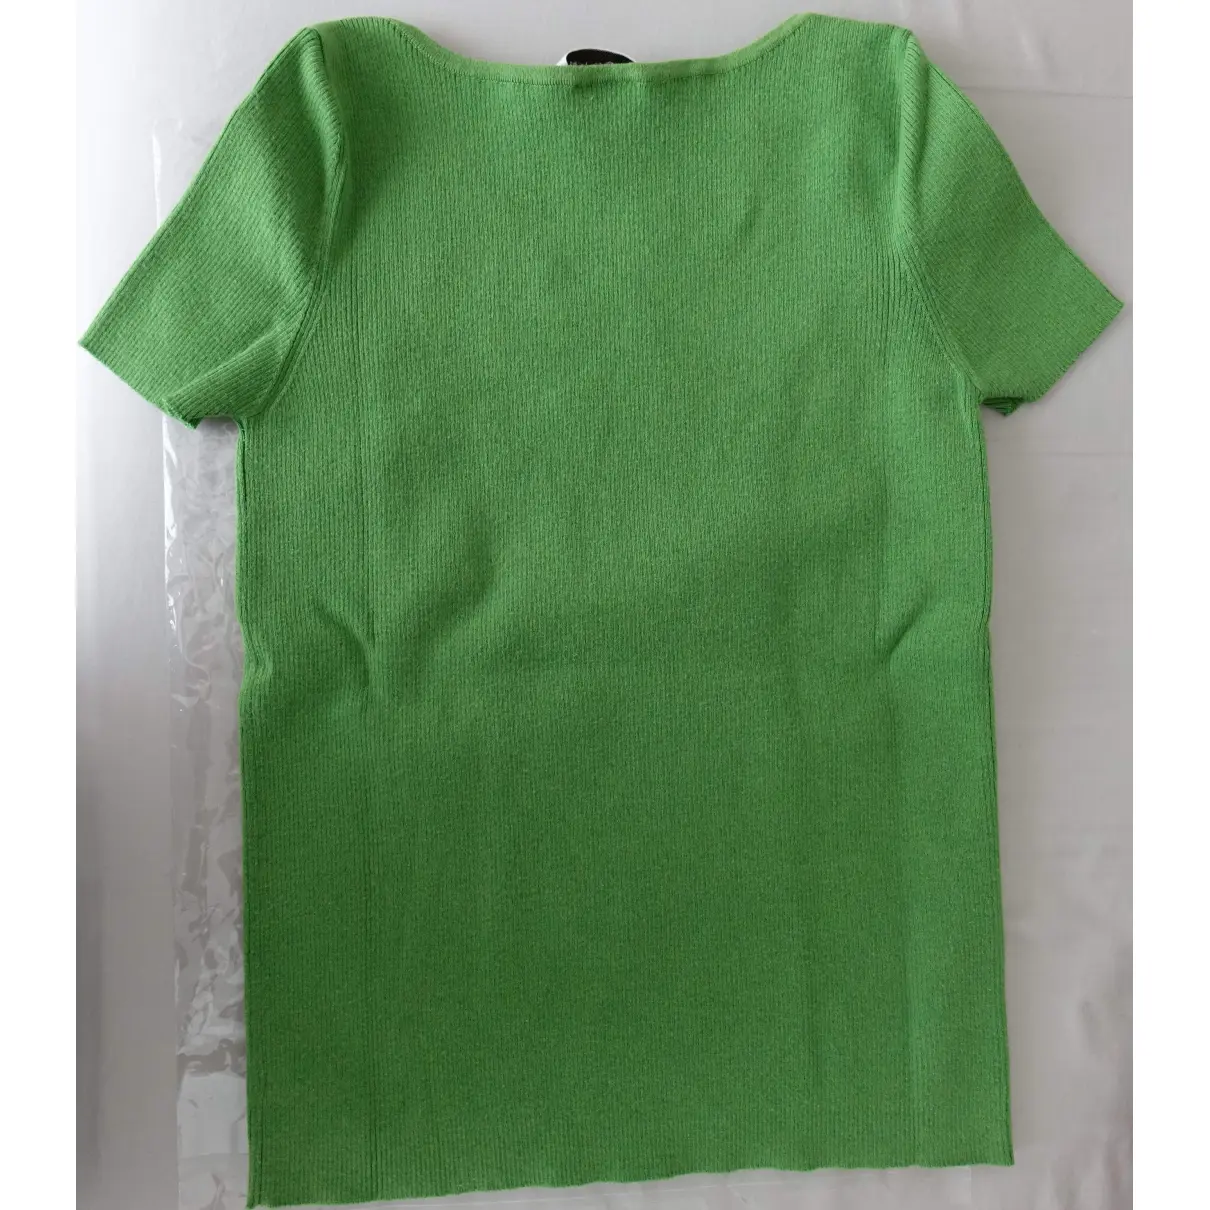 Buy Celine Green Cotton Top online - Vintage